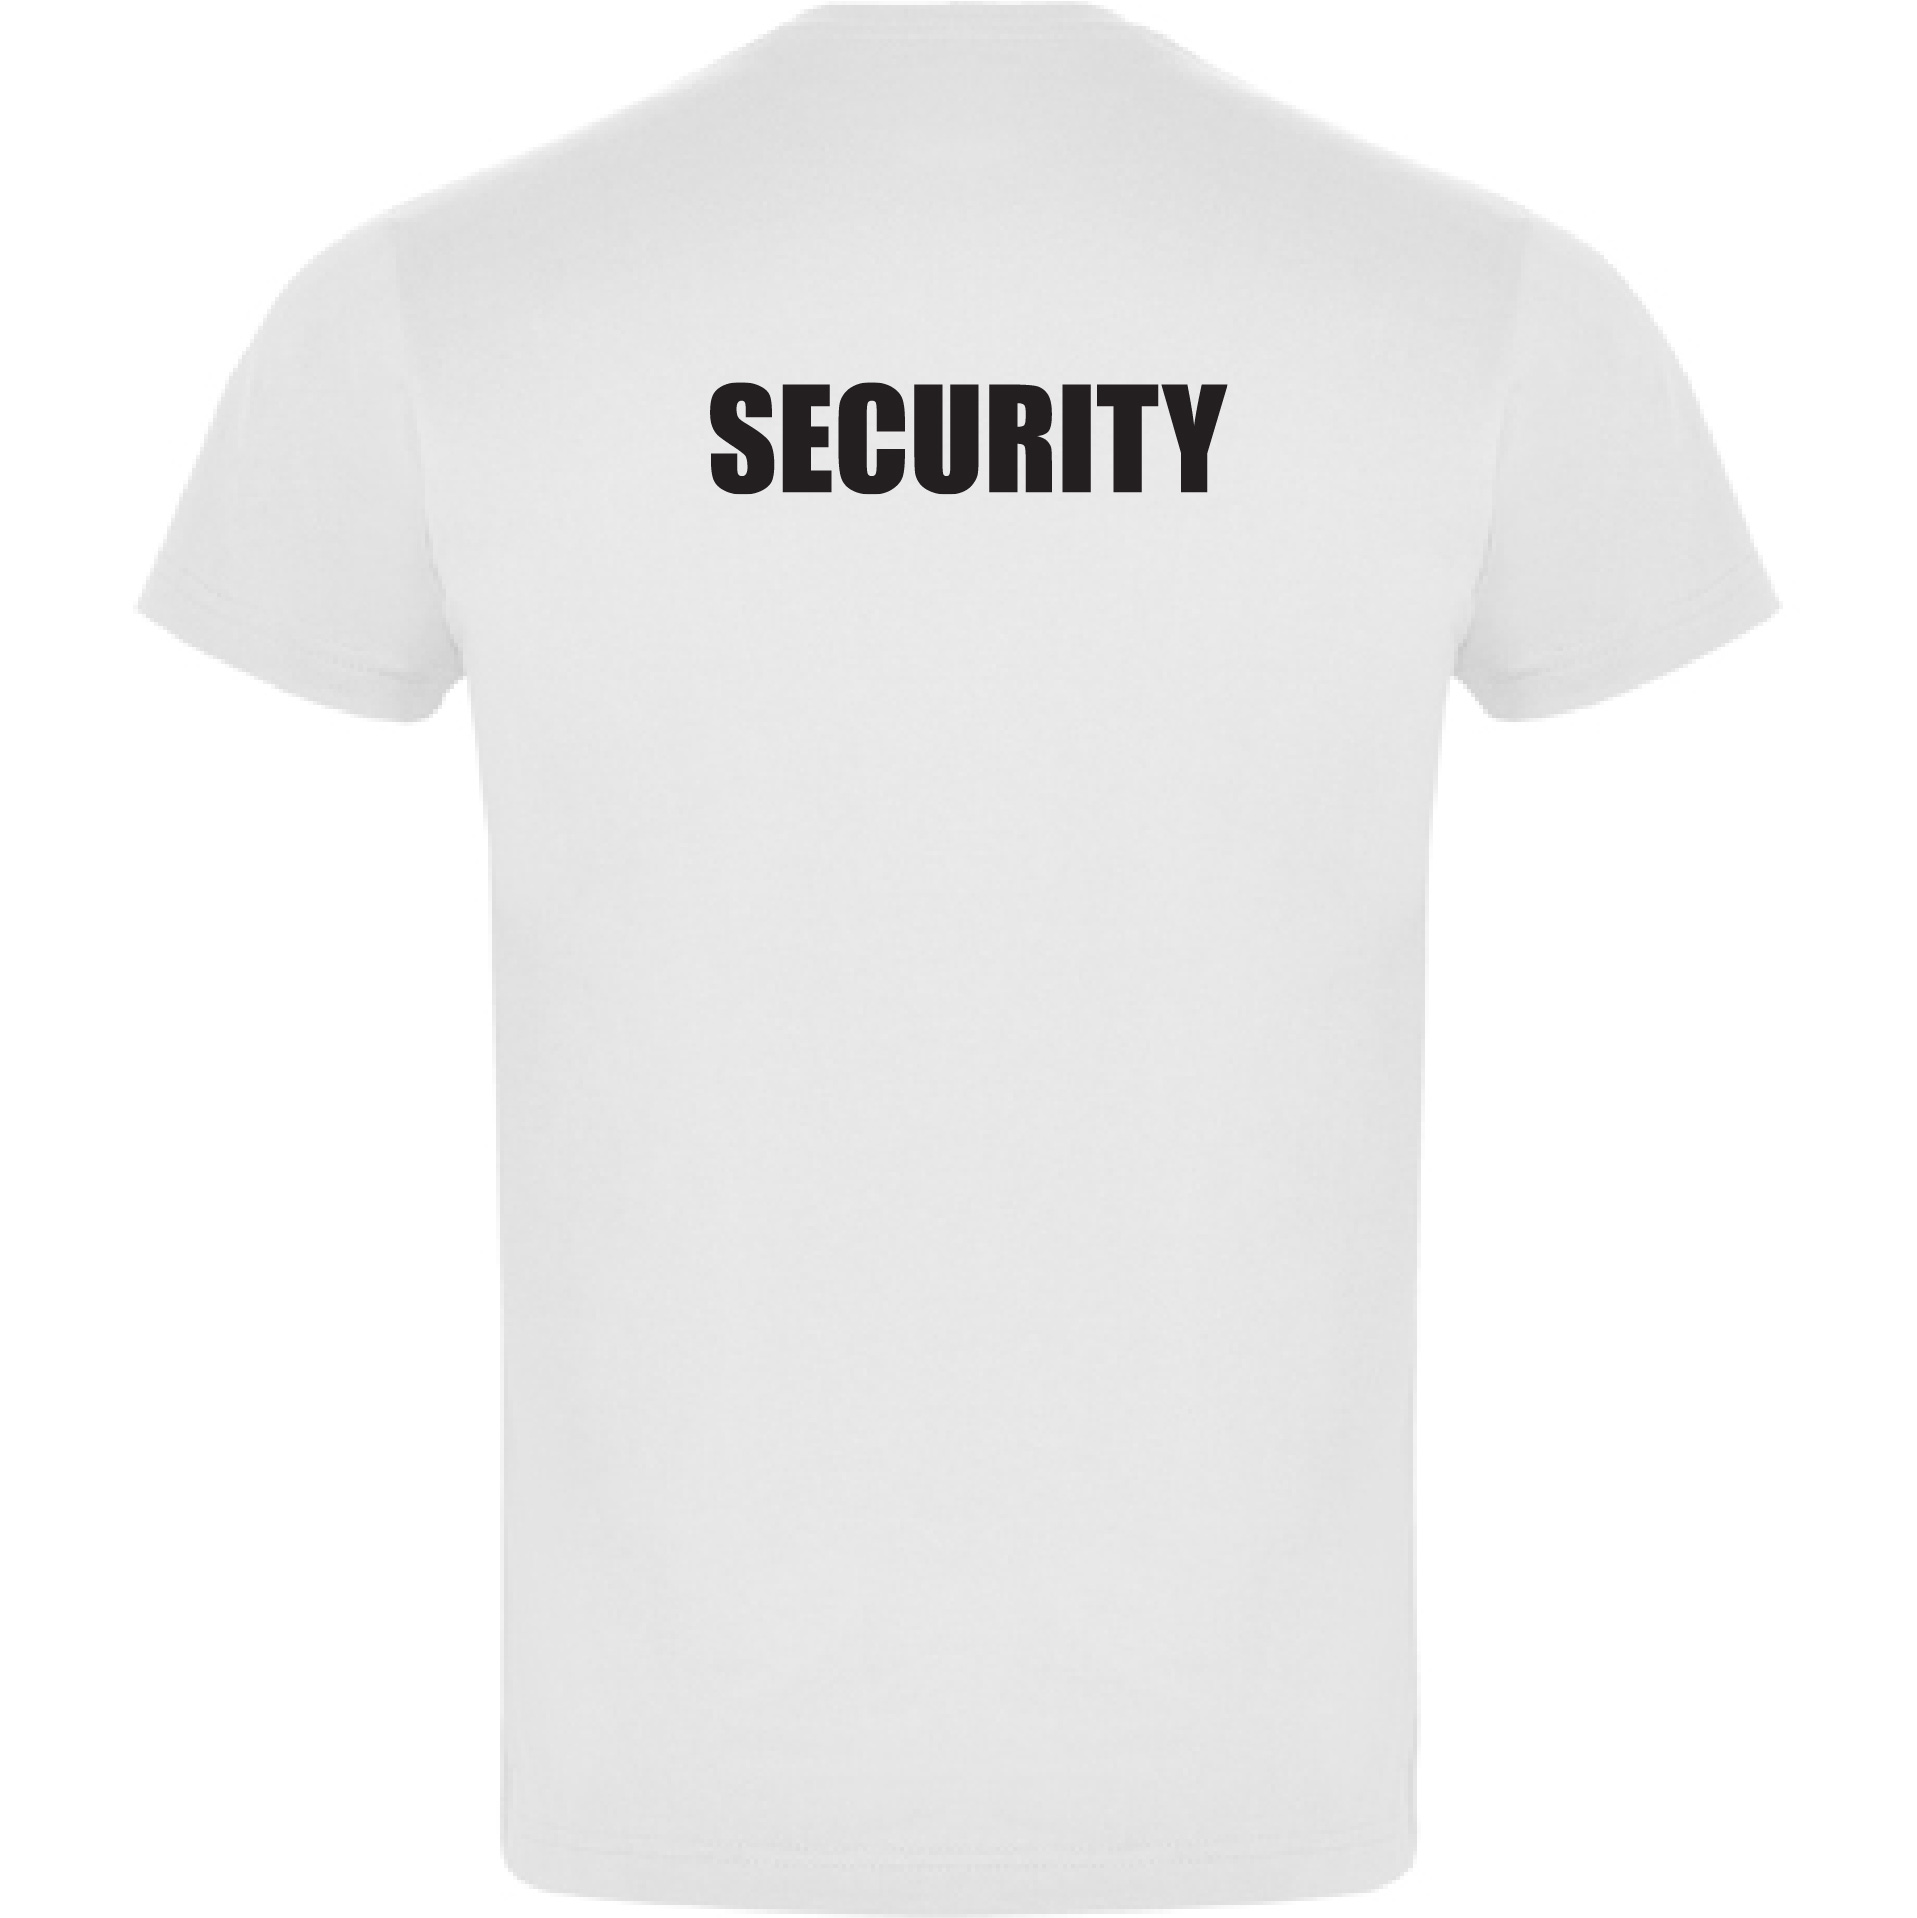 638017905742931439_t-shirt_security_back_white.jpg